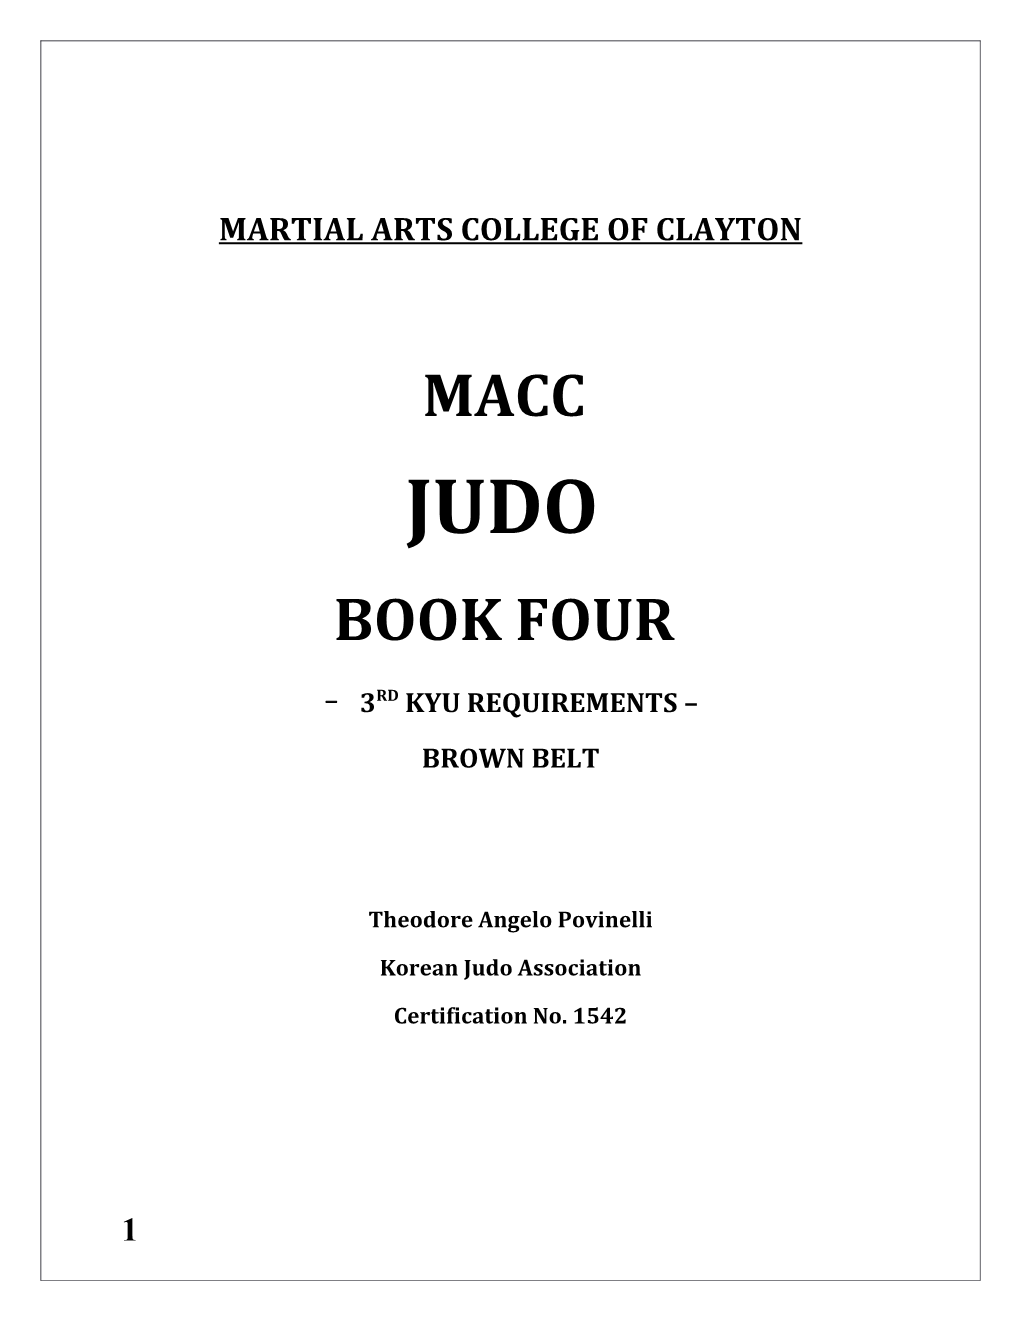 Martial Arts College of Clayton